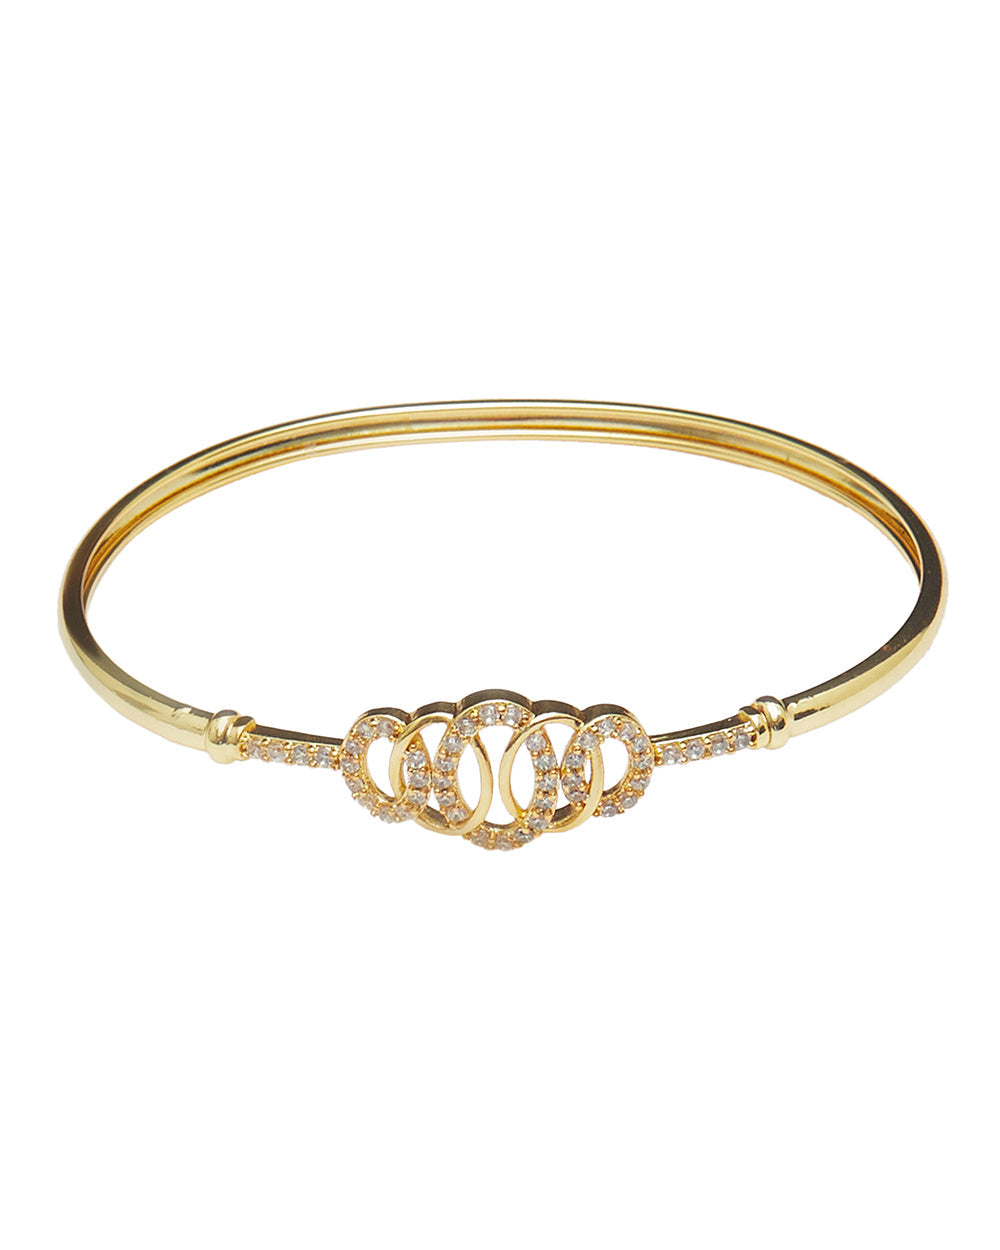 Women's Gold Finish Bracelet With Solid Design From Sparkling Elegance - Voylla